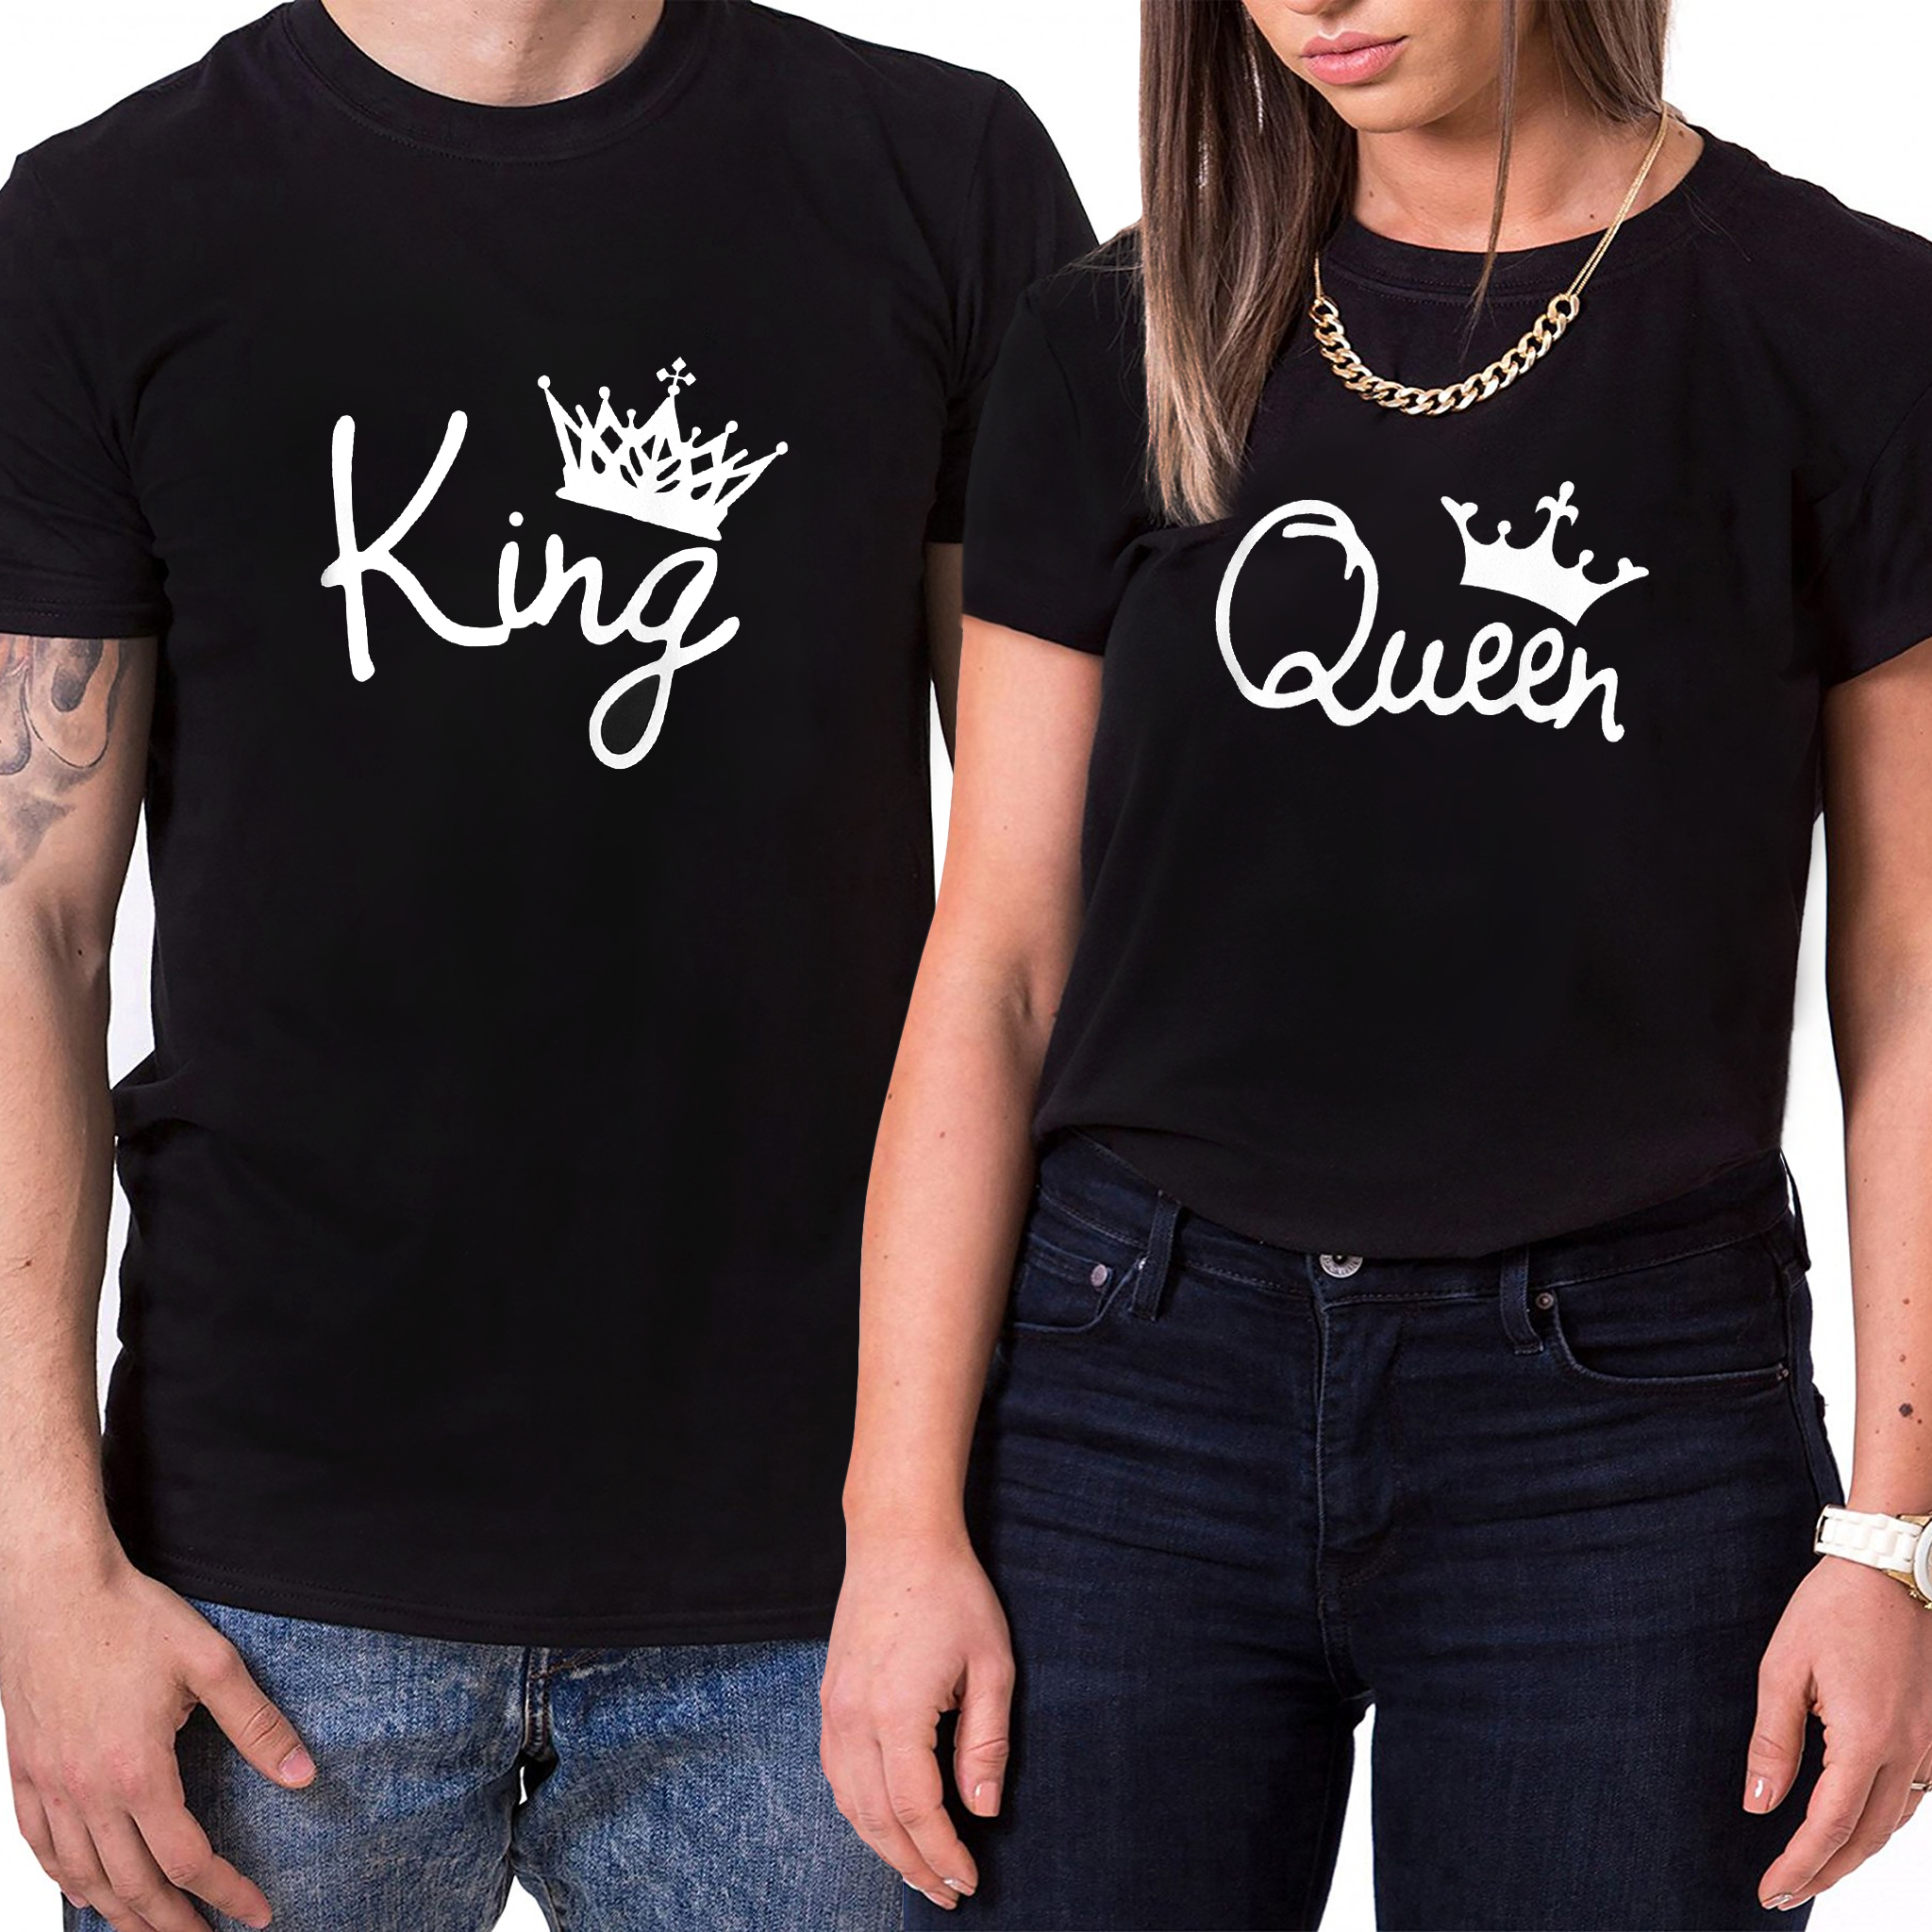 Camisetas King and Queen para Parejas